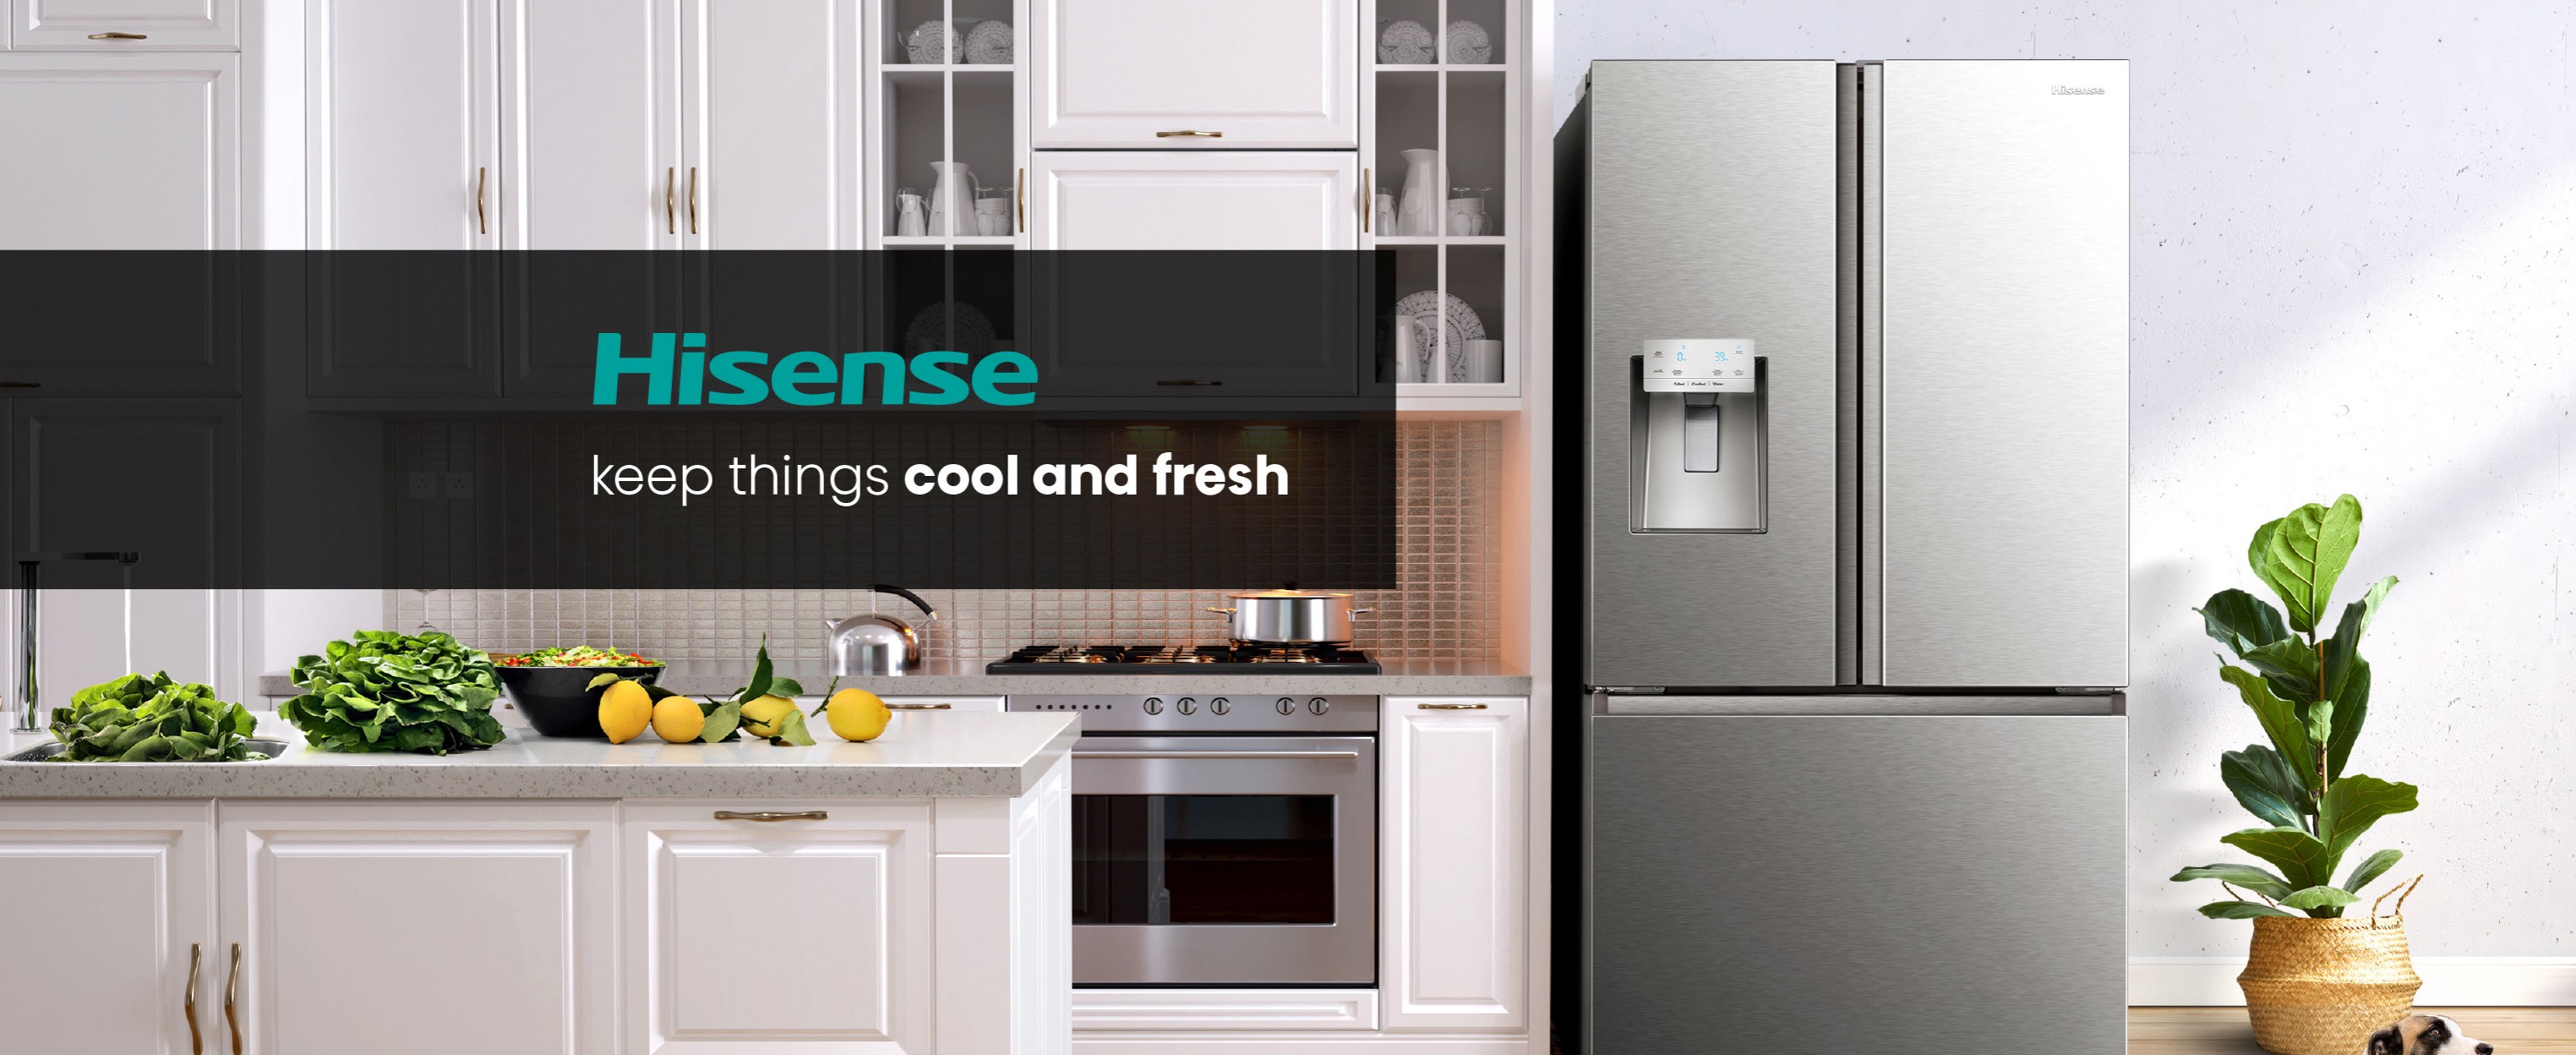 Hisense keep things cool and fresh